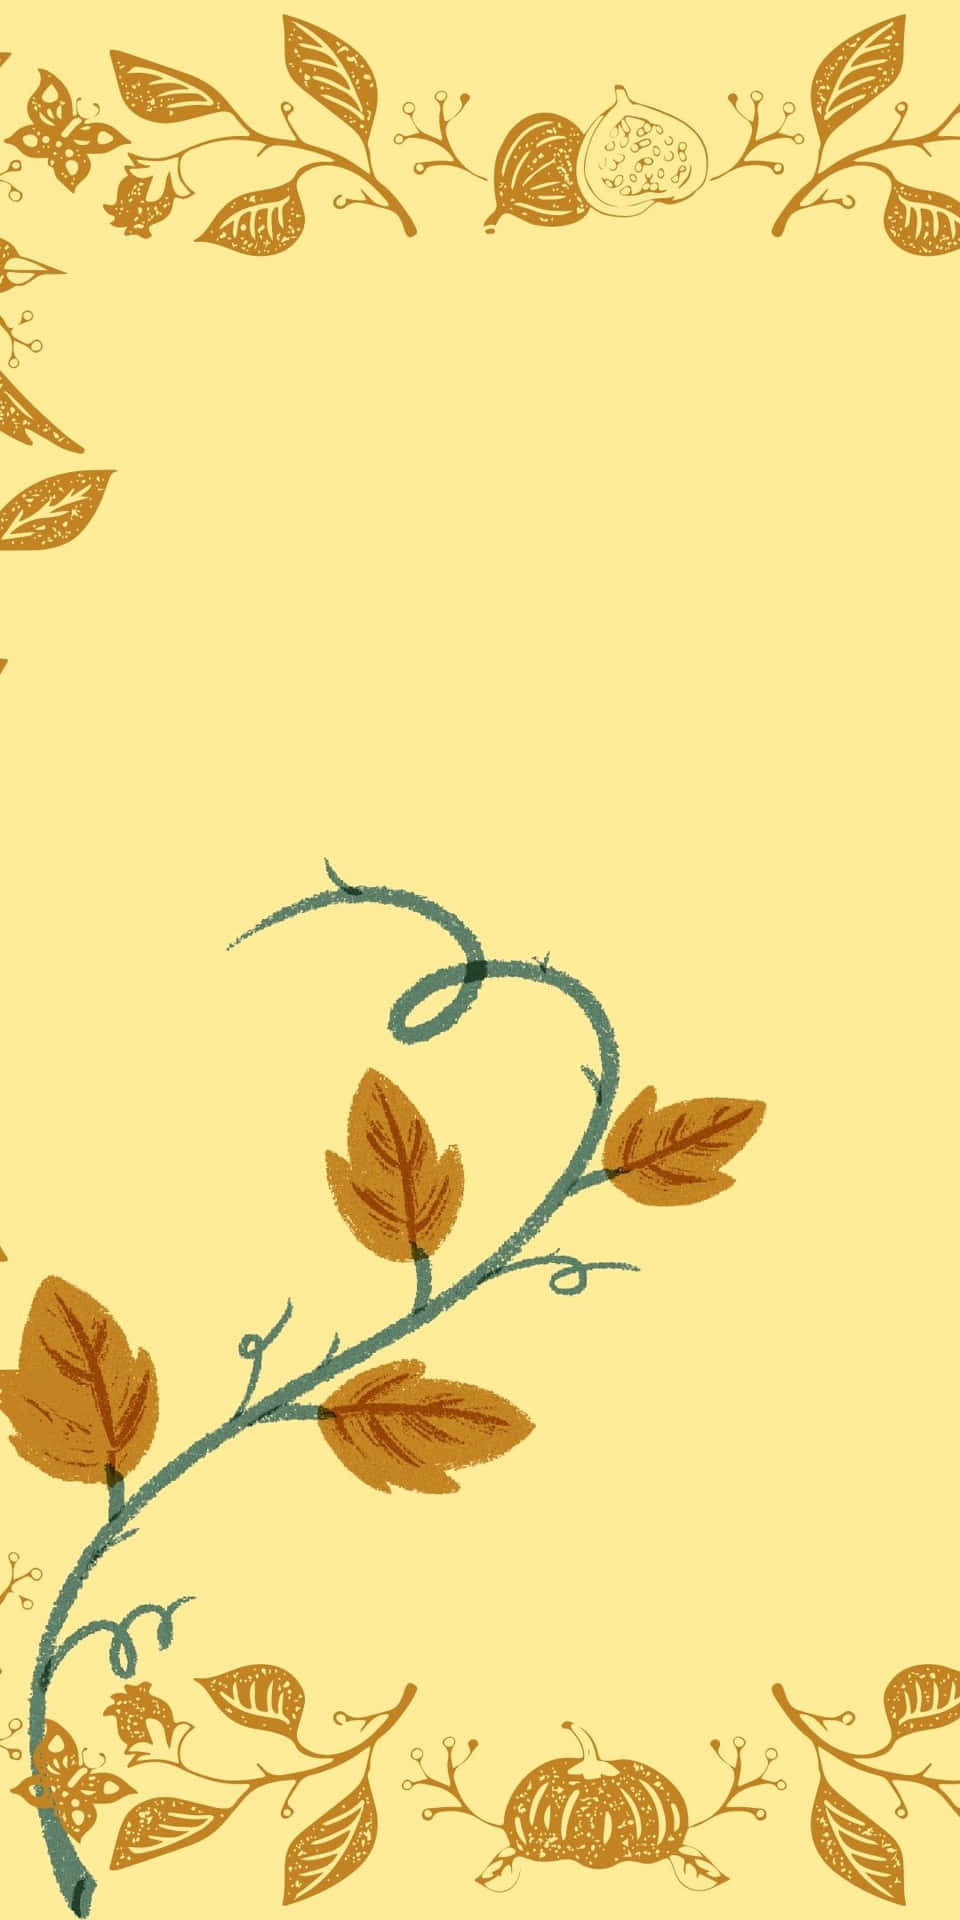 Vines Graphic Design Android Autumn Background